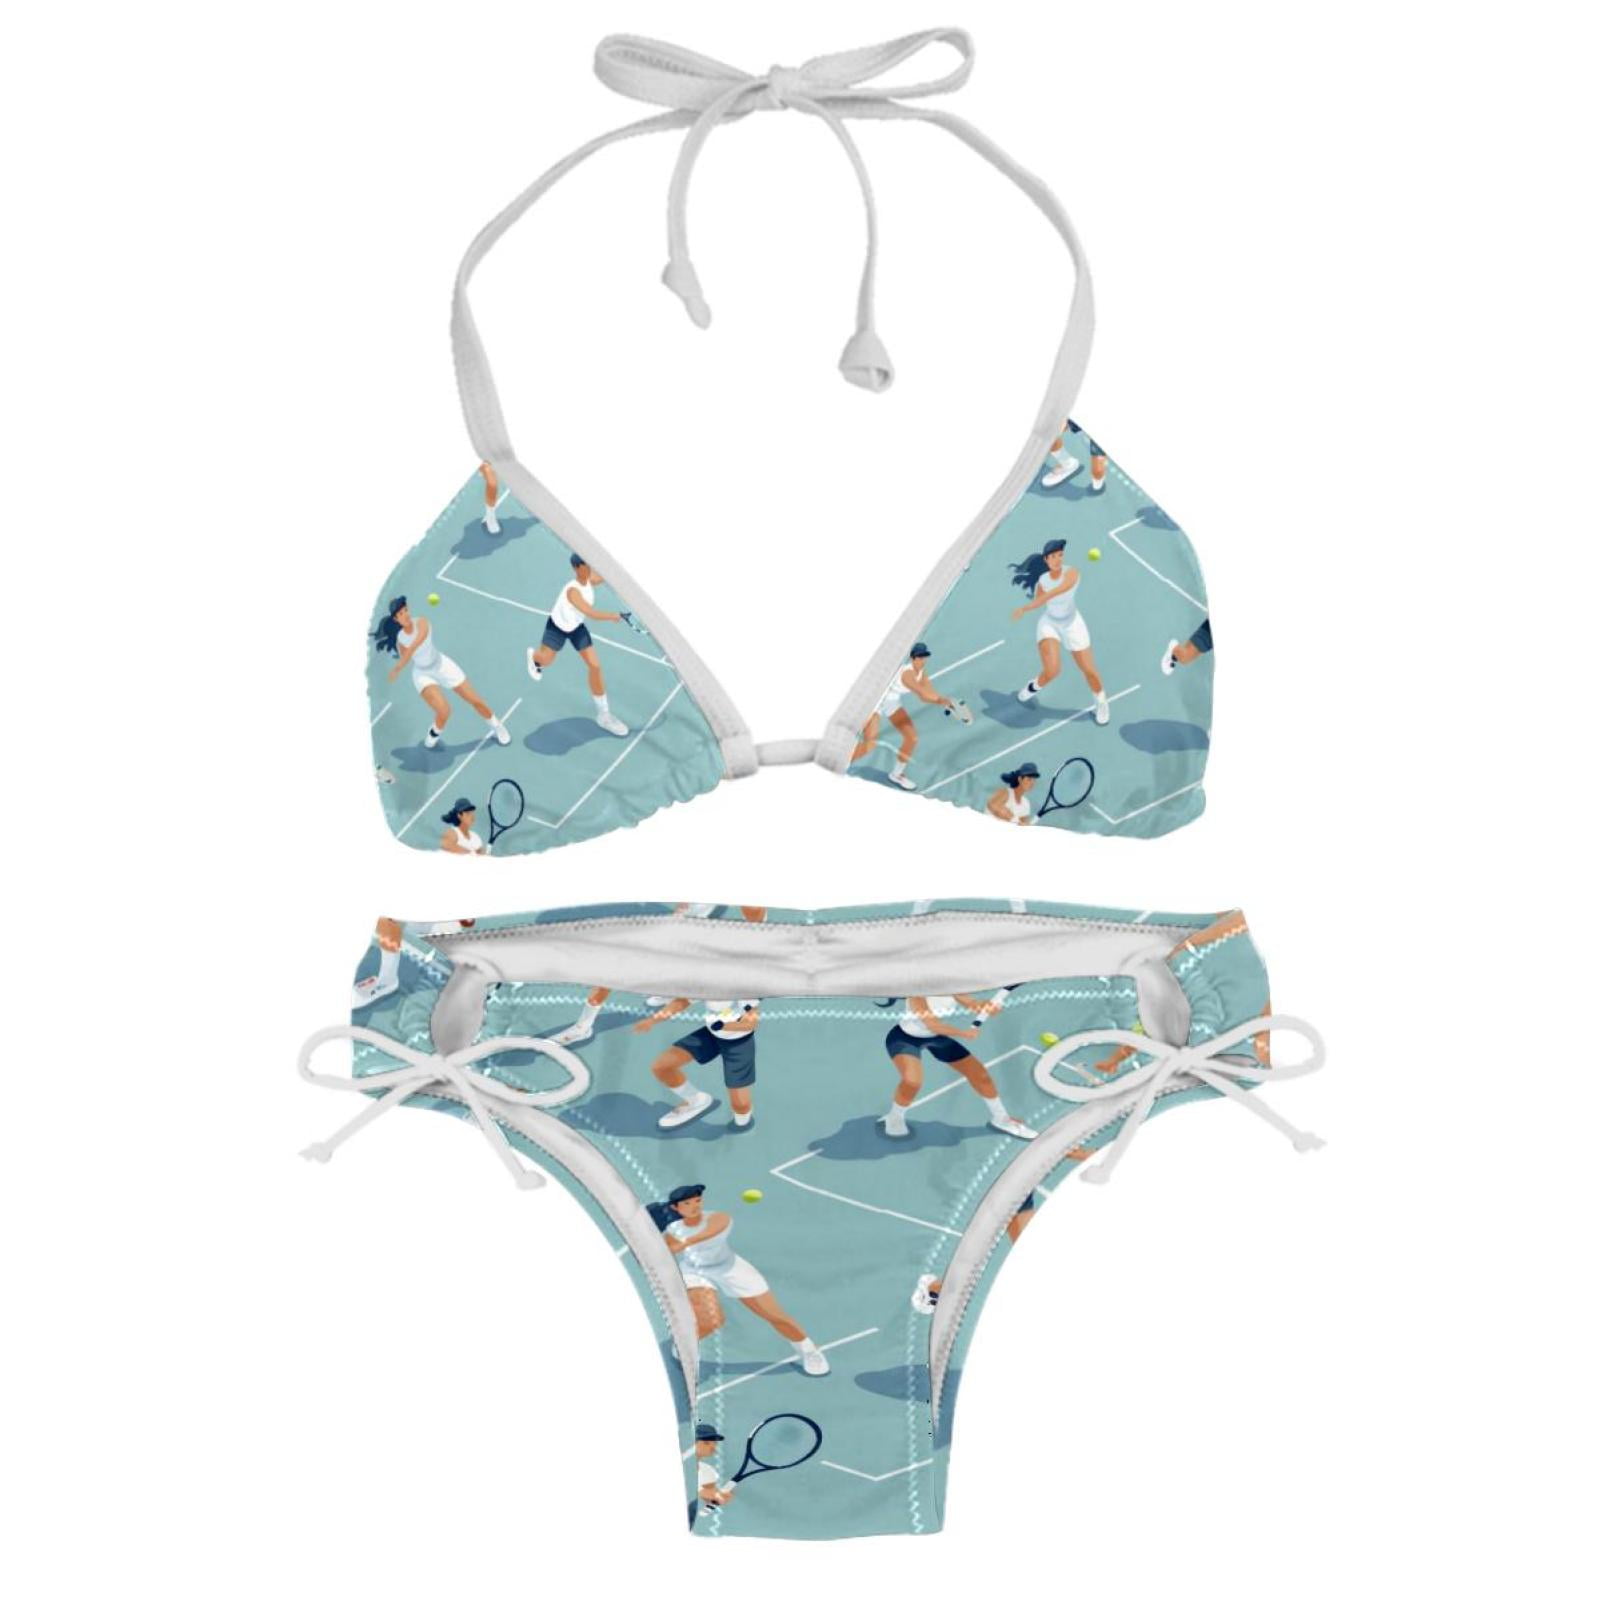 Tennis Women's Swimwear Bikini Set with Detachable Sponge and ...